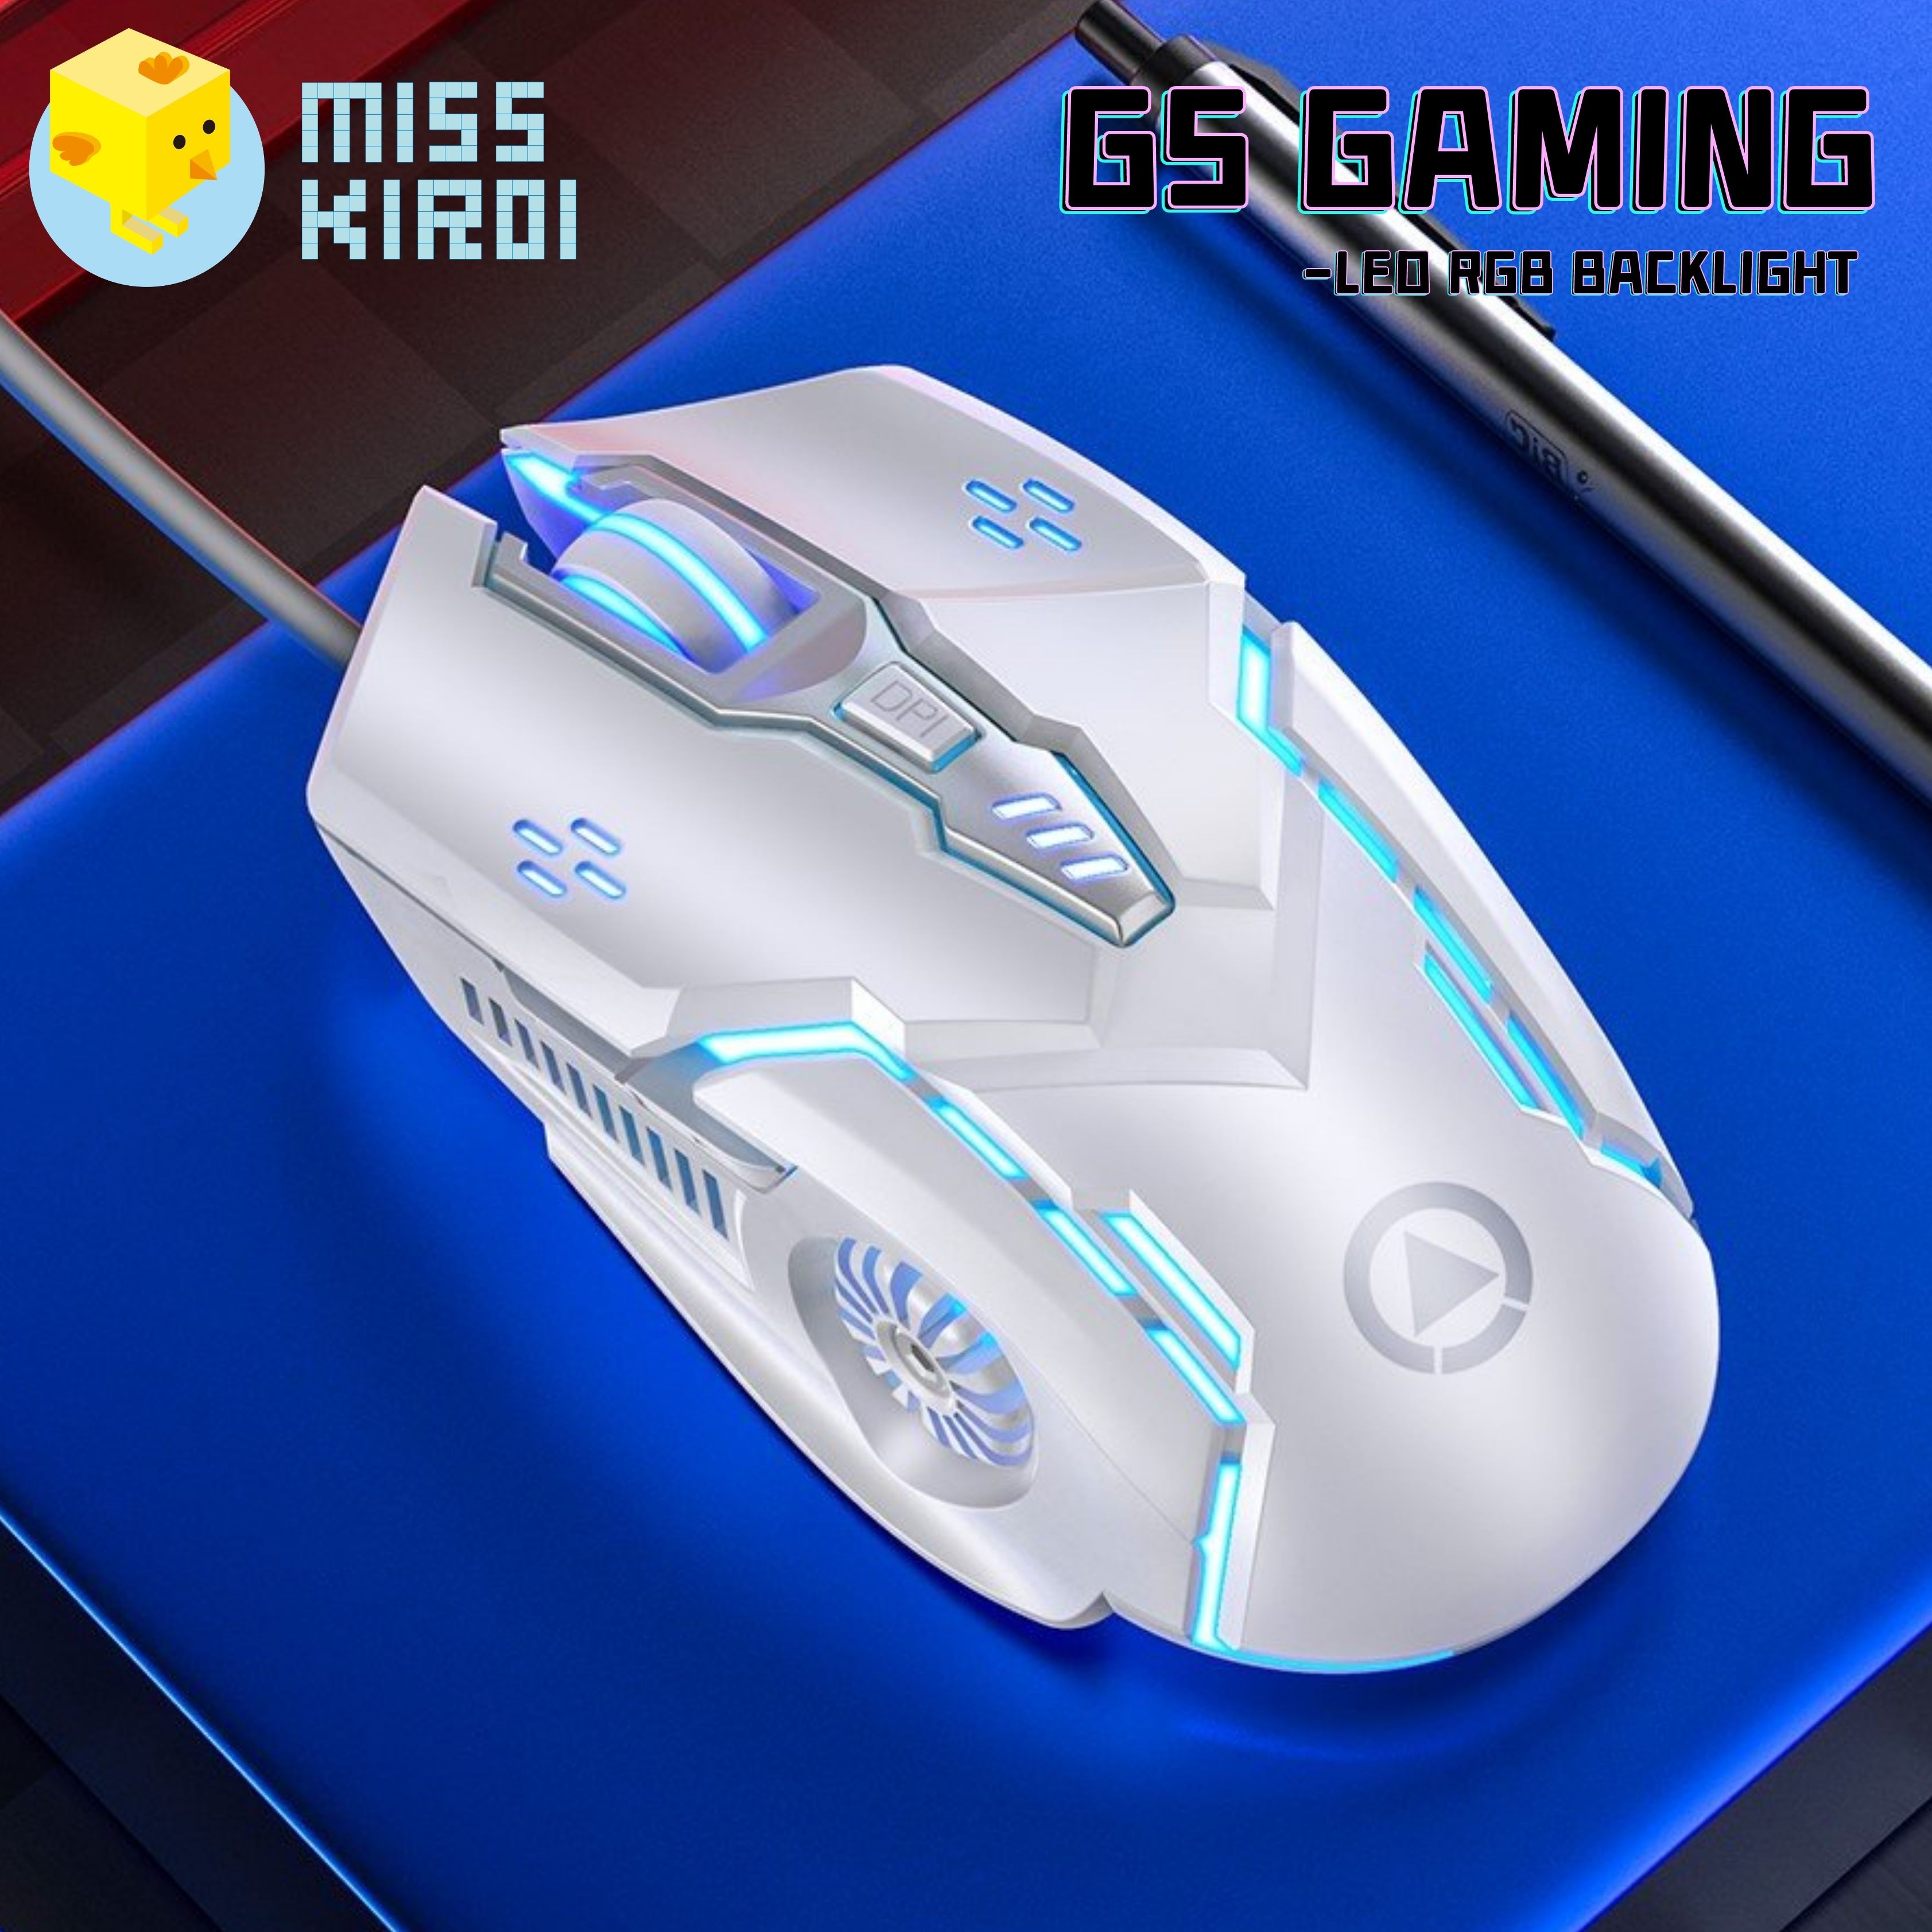 Miss Kiroi Model G5 Laser RGB Gaming Mouse เมาส์เกมมิ่ง ออฟติคอล ความแม่นยำสูงปรับ DPI 1200-3200 เหมาะกับเกม MMORPG (BNS) FPS MoBA เกมคอมพิวเตอร์เดสก์ท็อปแบบมีสายเงียบเ